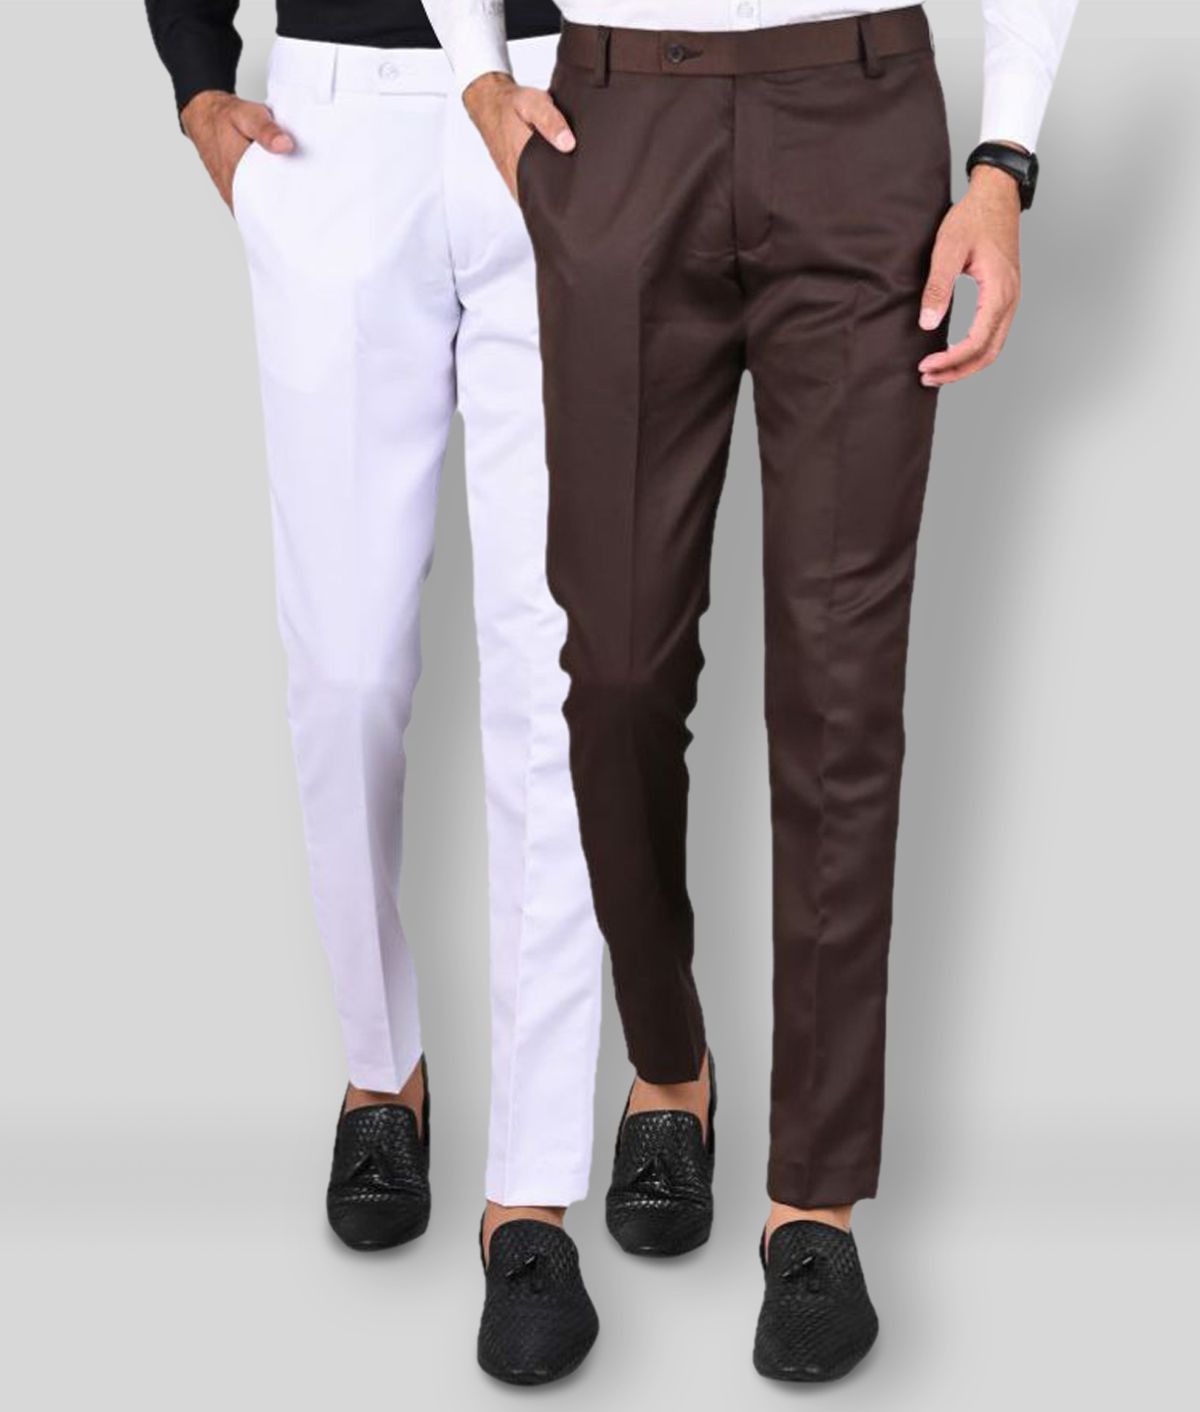     			MANCREW - Brown Polycotton Slim - Fit Men's Formal Pants ( Pack of 2 )